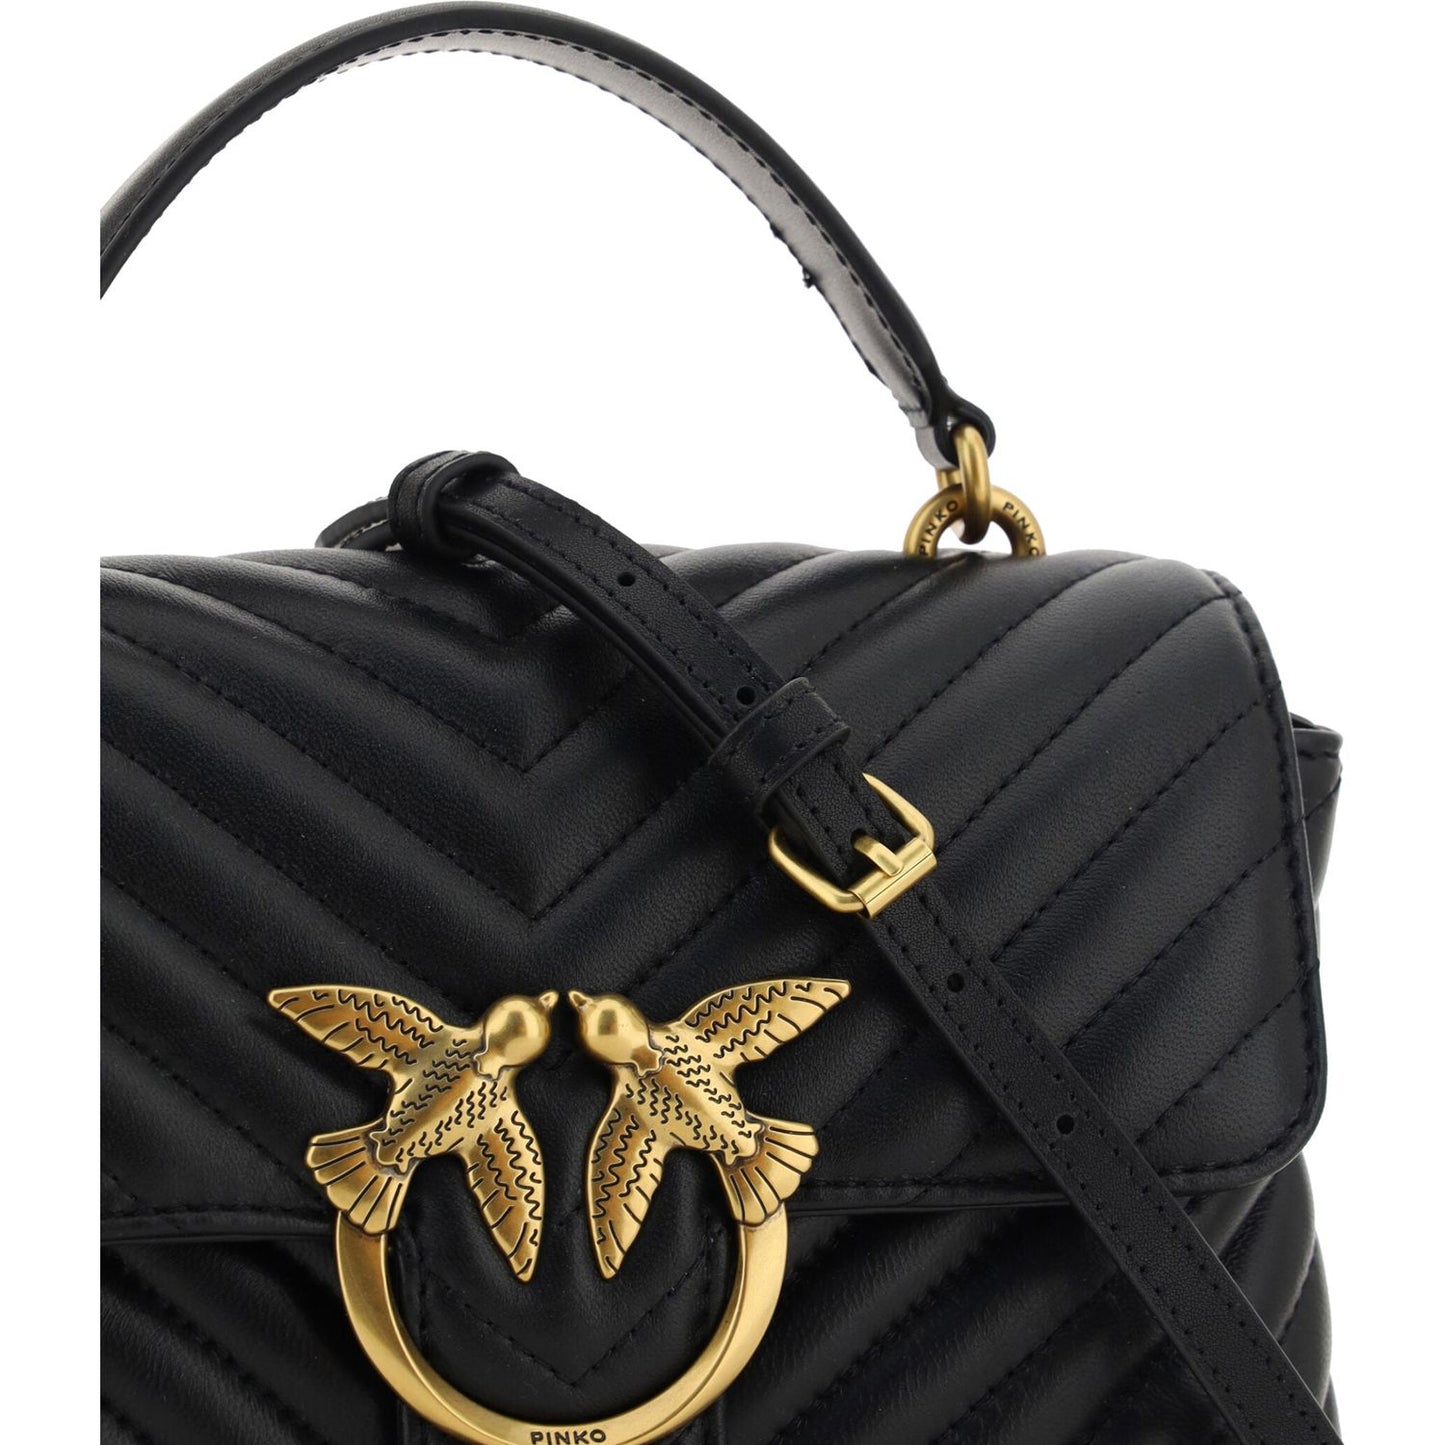 PINKO Elegant Quilted Mini Handbag Charm black-calf-leather-love-lady-mini-handbag 6F6D8F59-1DB6-40D6-BBEC-B7B9652E123A-scaled-a77fdc4a-7dc.jpg